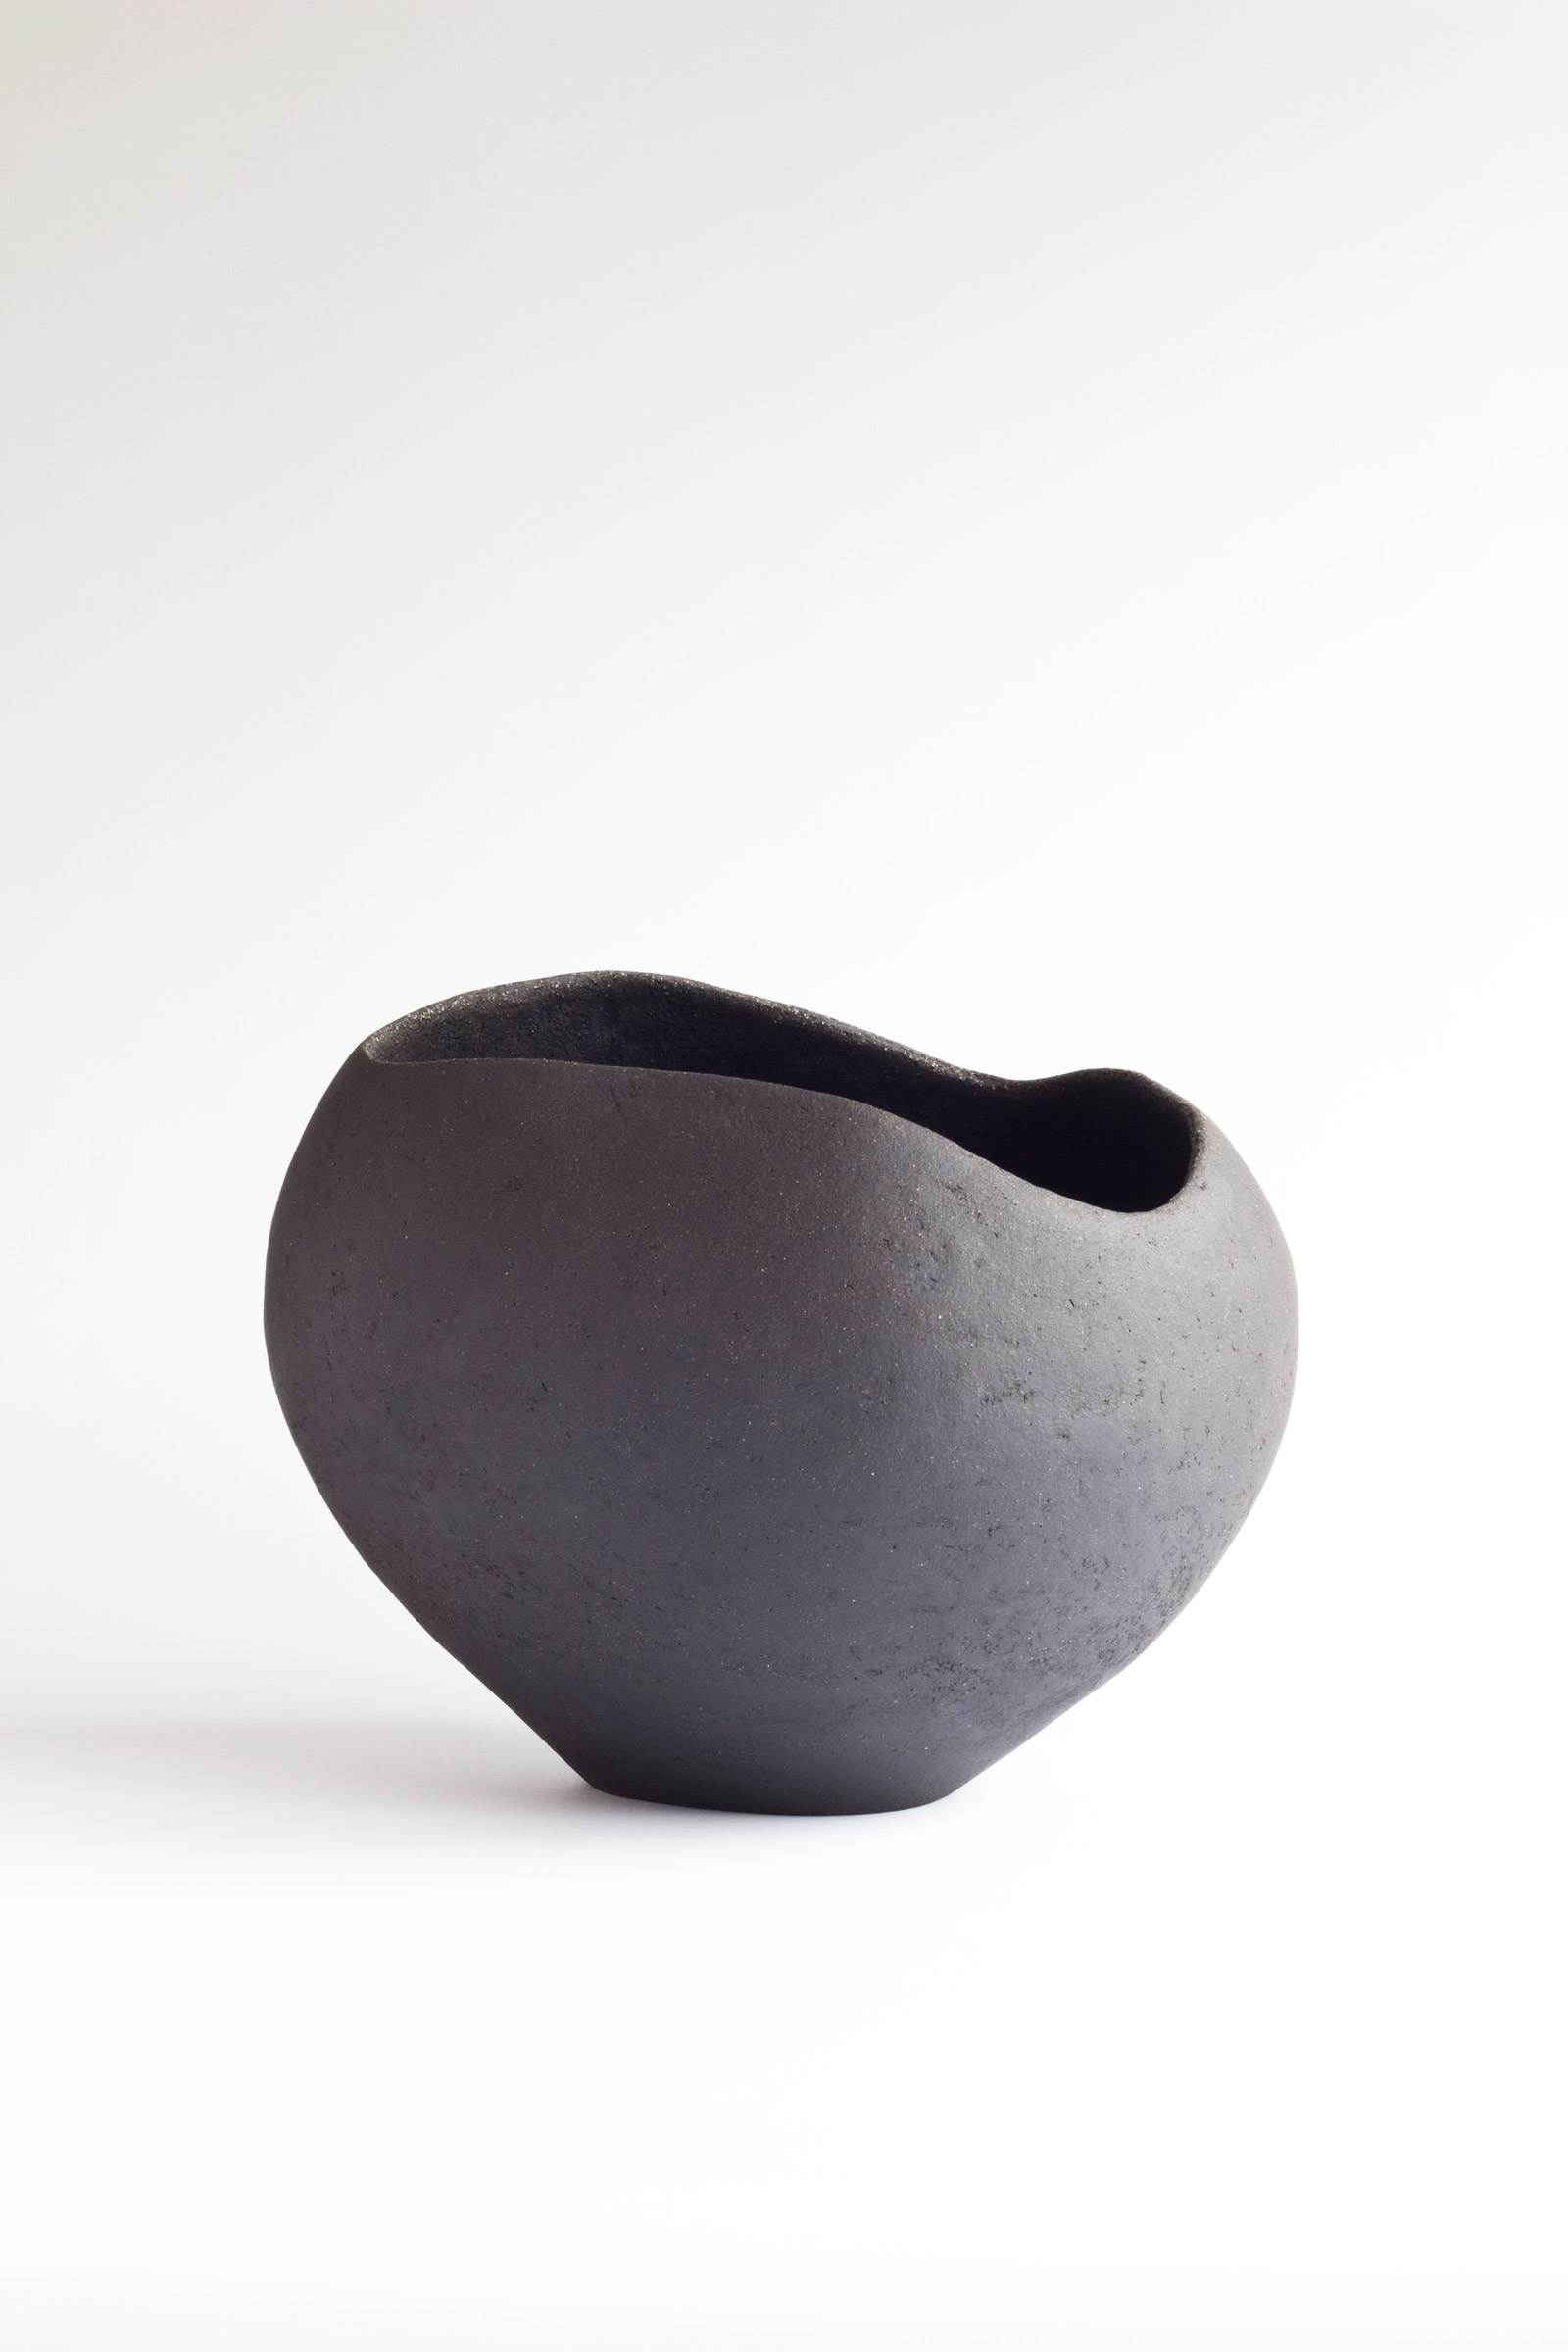 Yasha Butler Lithic Vessel Large Ceramic Sculpture Bowl Dark Black Brown